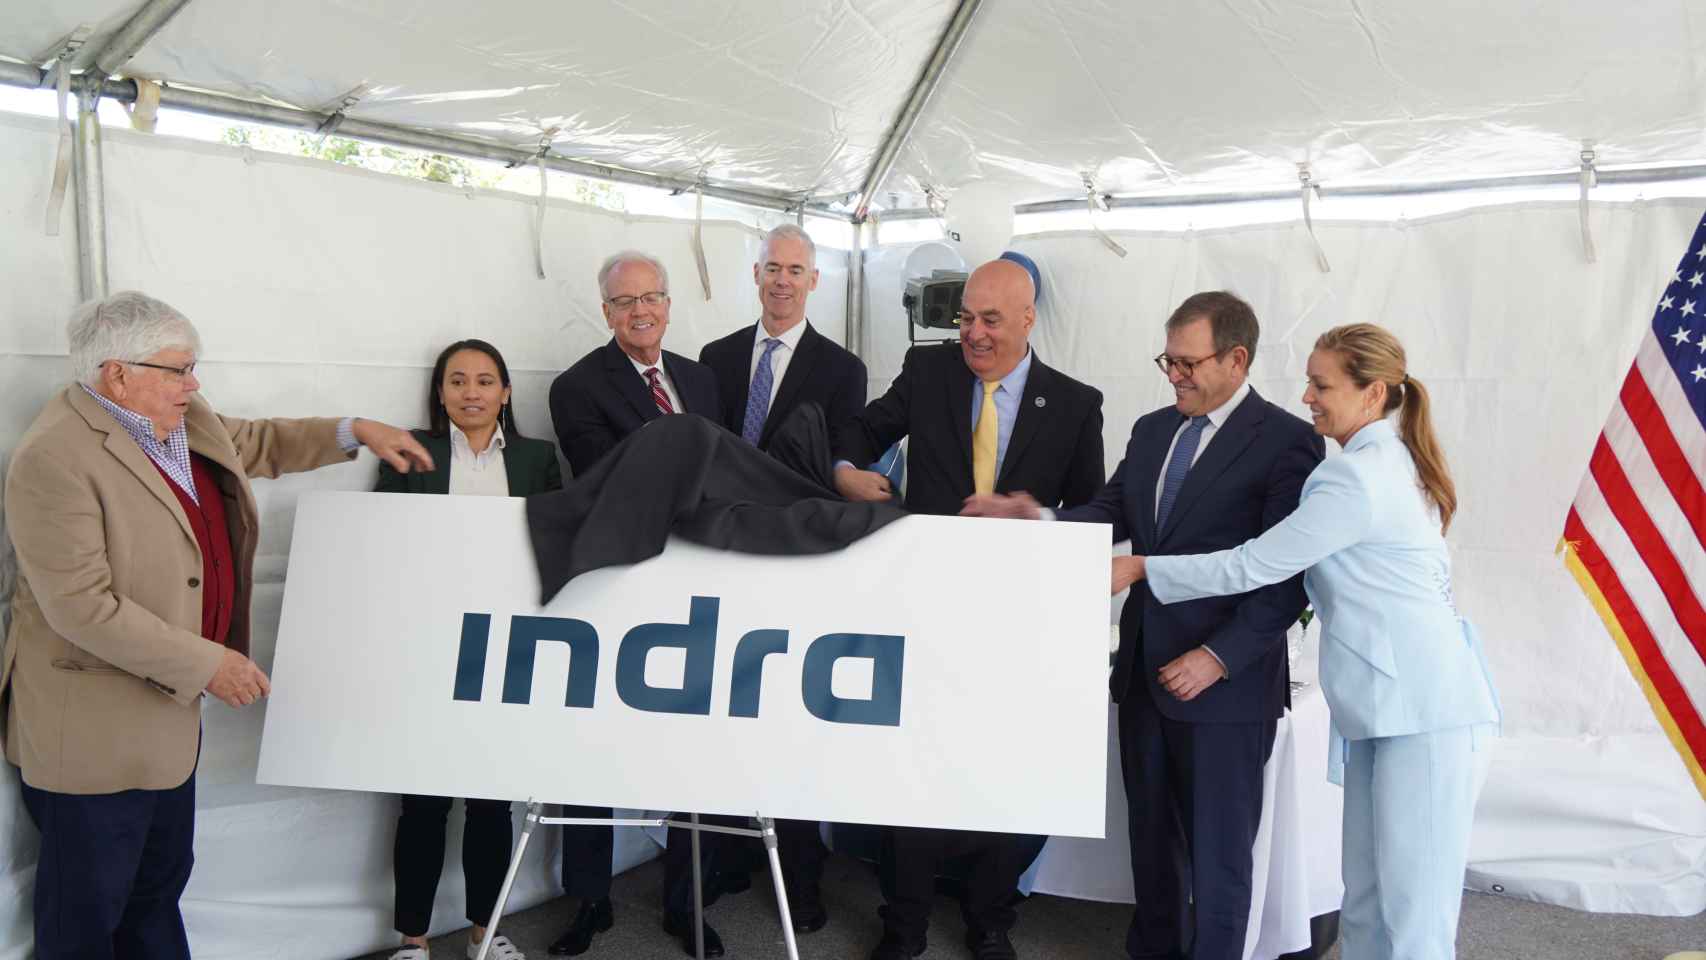 INDRA presenta su filial estadounidense en Kansas